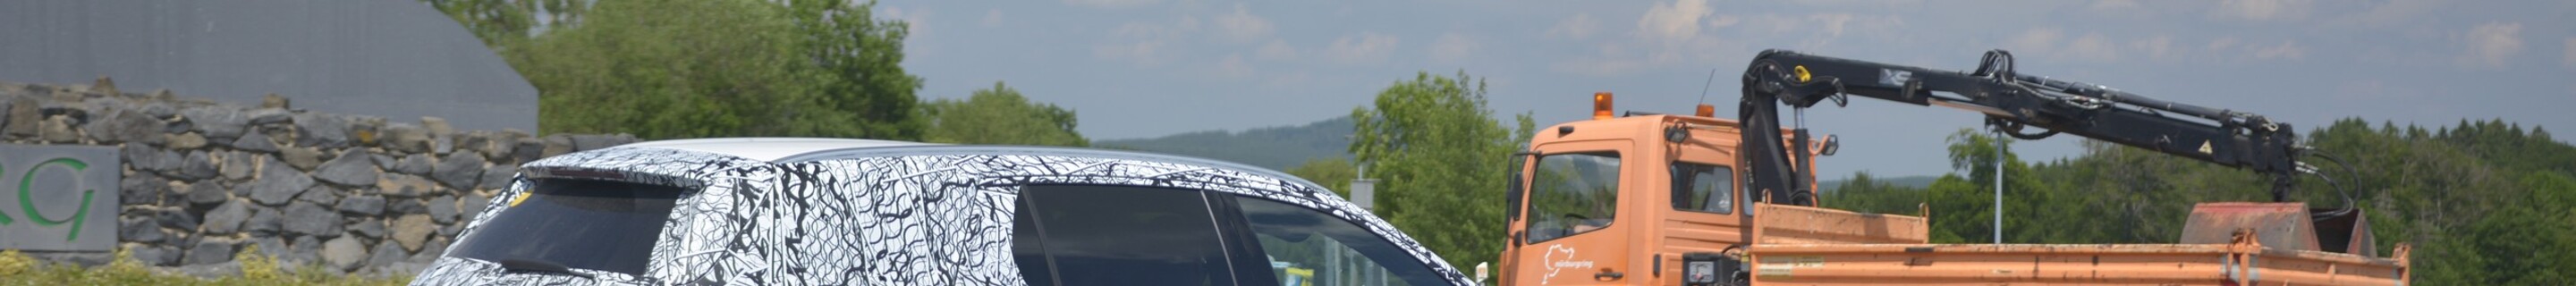 Mercedes-AMG C 63 S E-Performance Estate S206